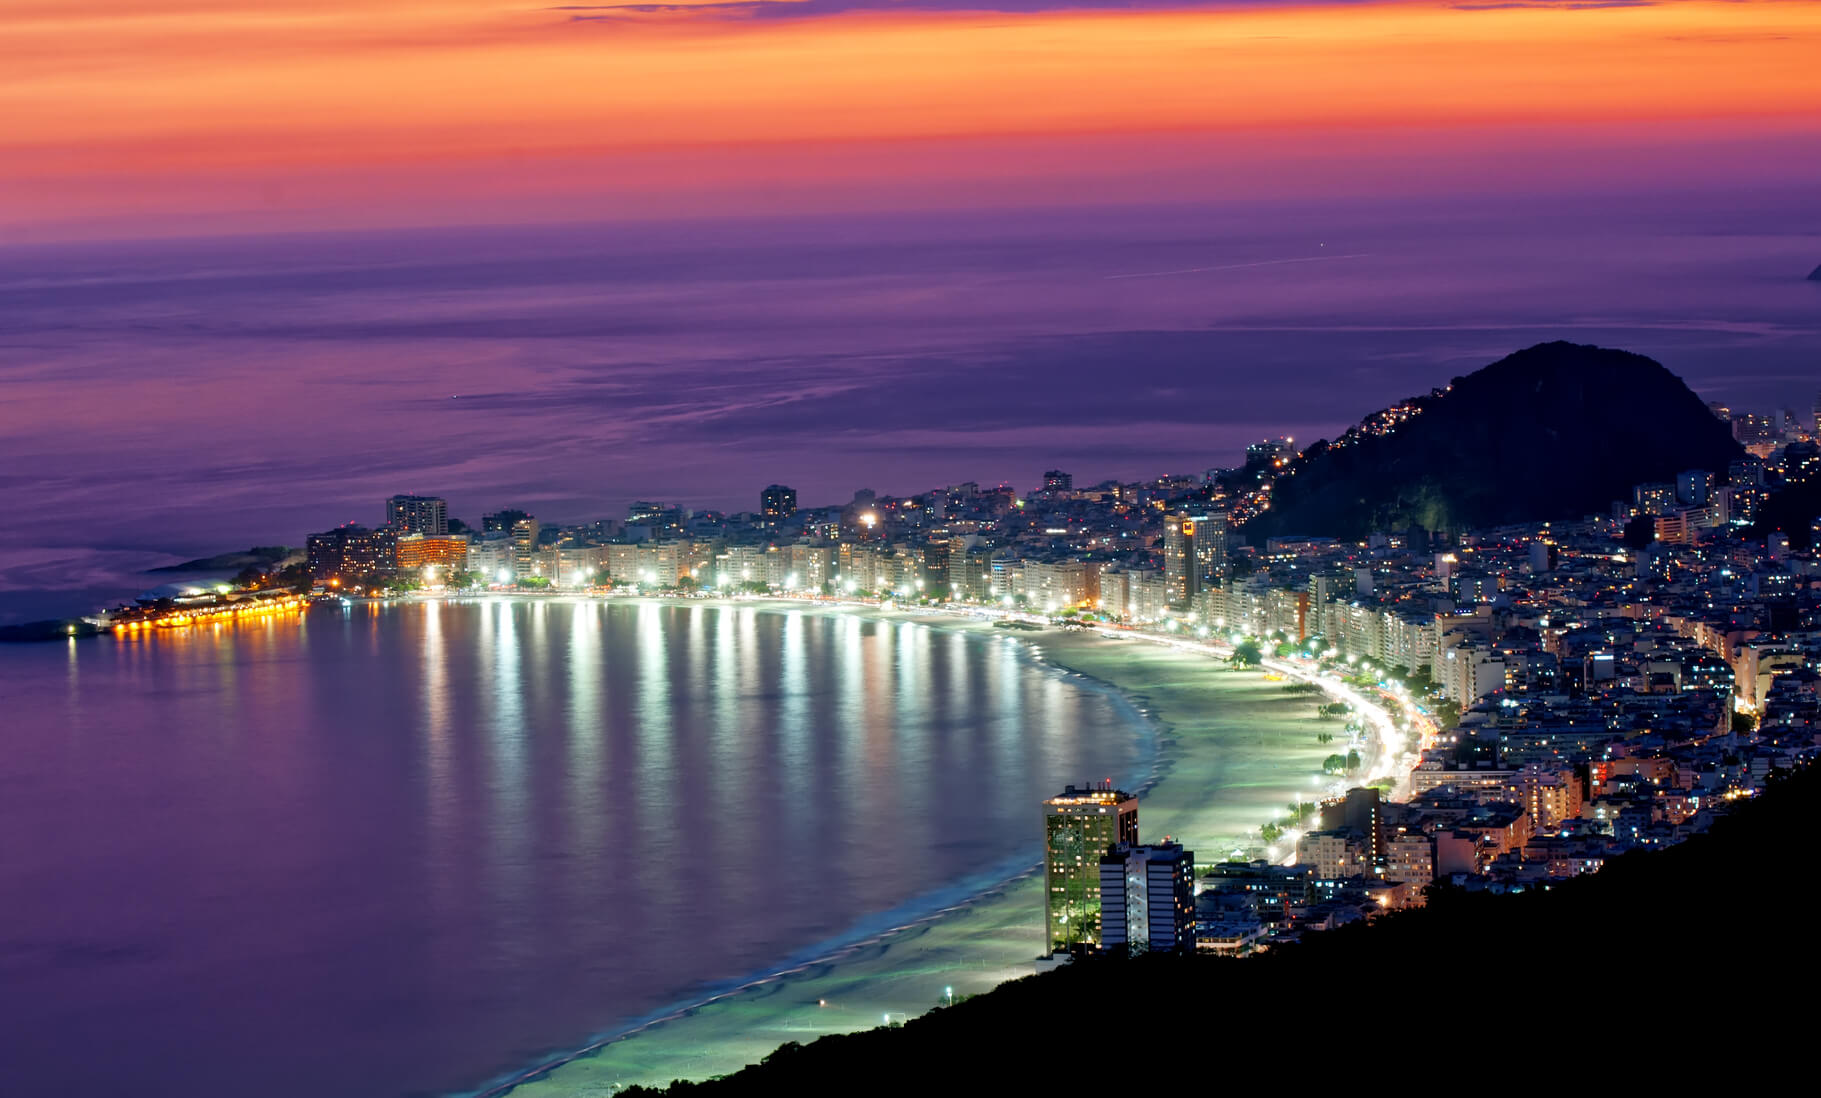 Flight deals from Frankfurt or Munich, Germany to Rio de Janeiro, Brazil | Secret Flying